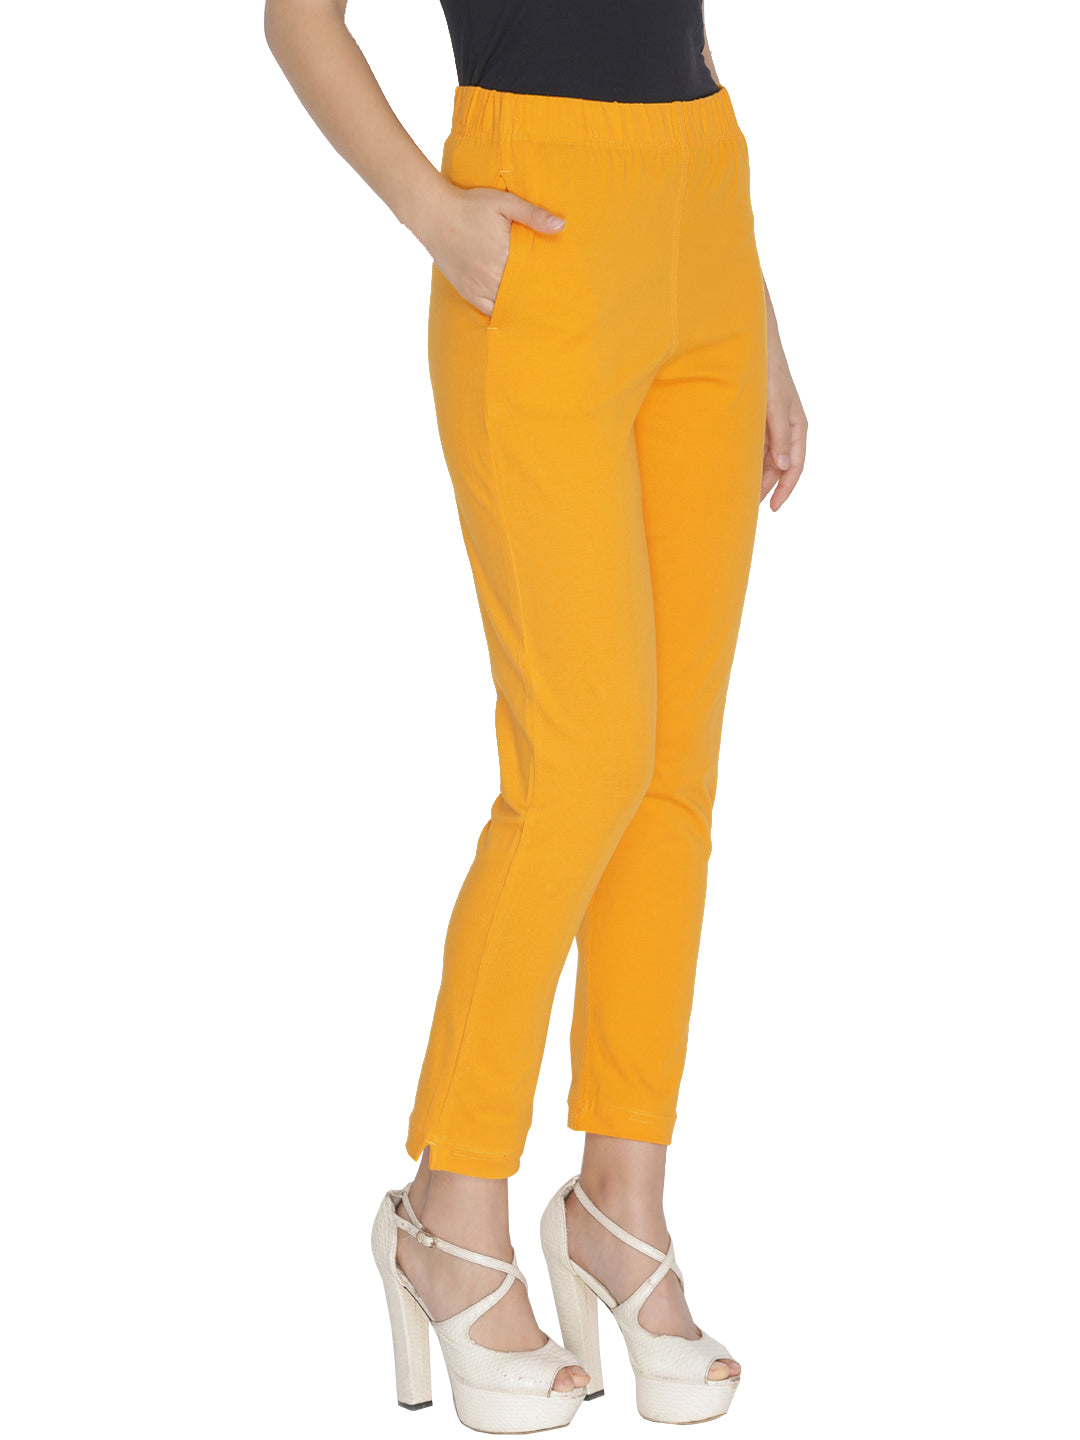 ASOS DESIGN slim suit trousers in textured mustard | ASOS